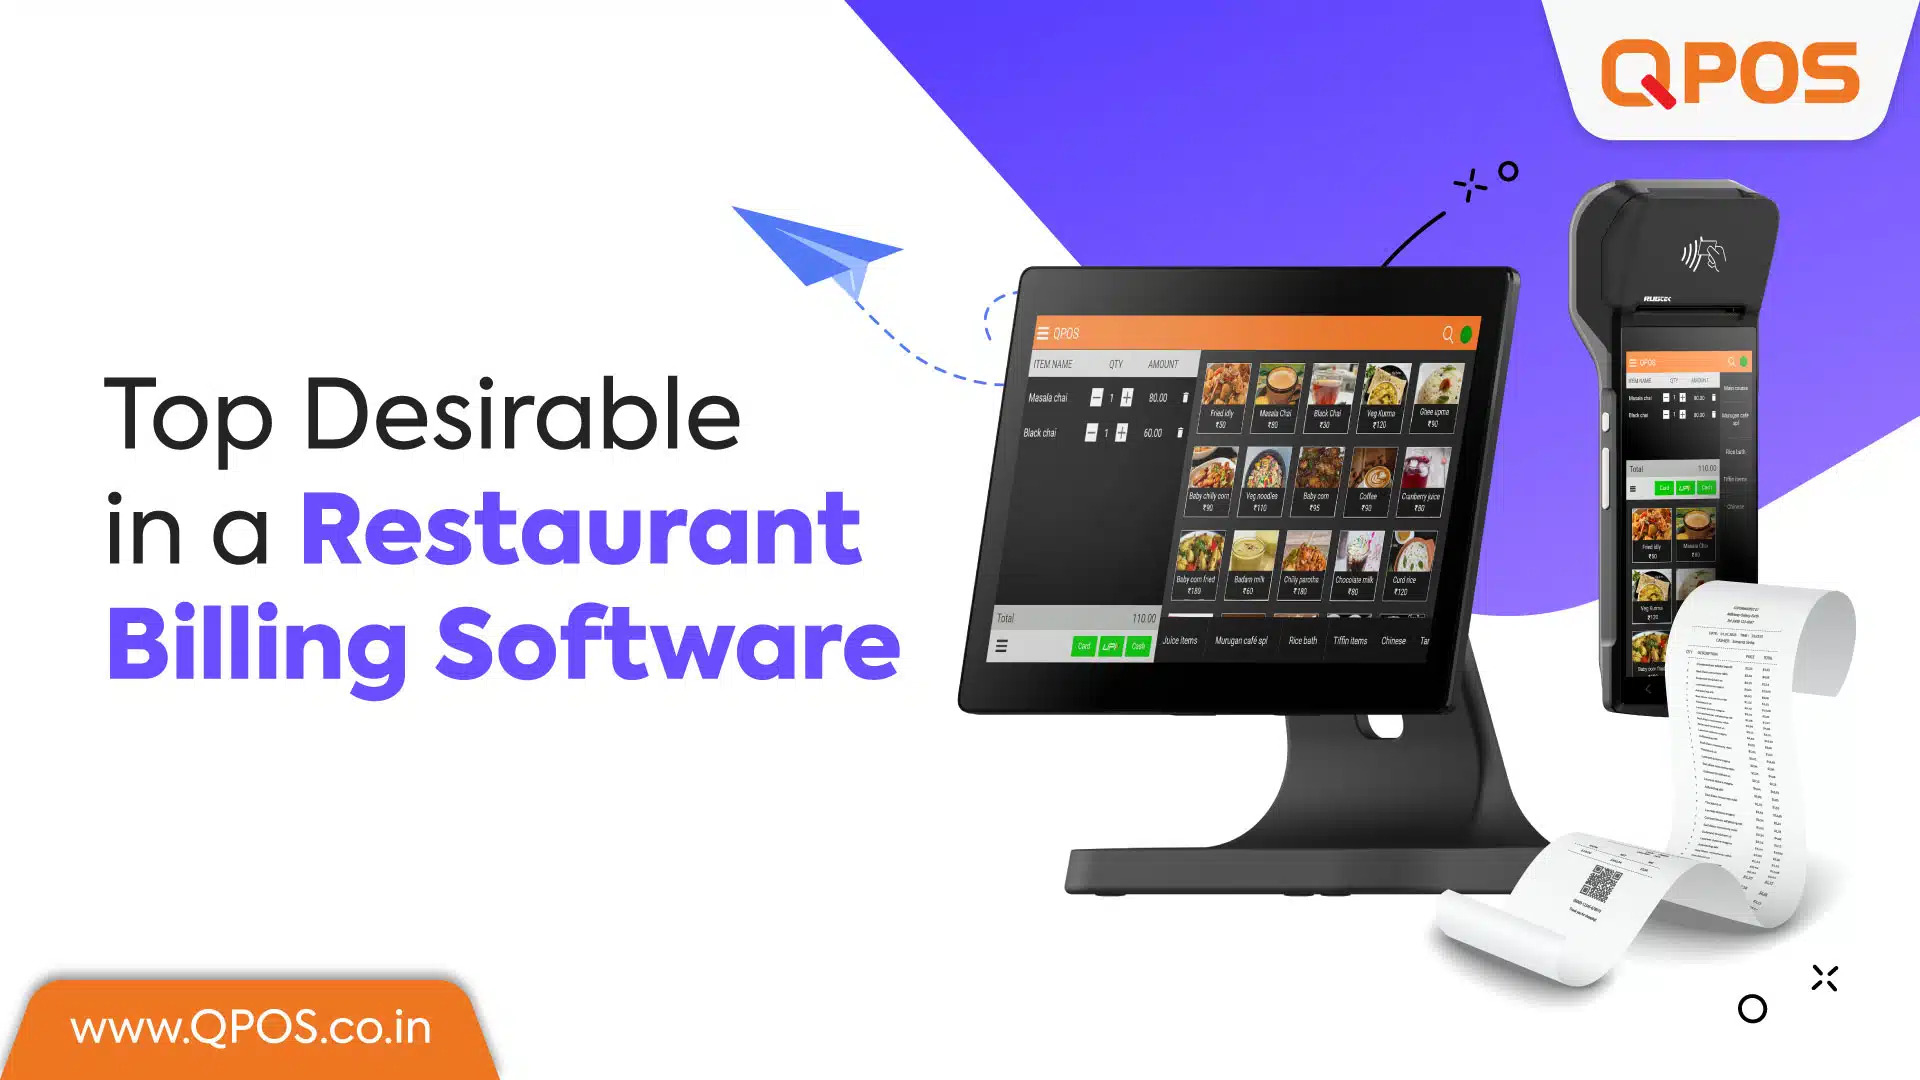 QPOS-Top-6-Desirables-in-a-Restaurant-Billing-Software.jpg